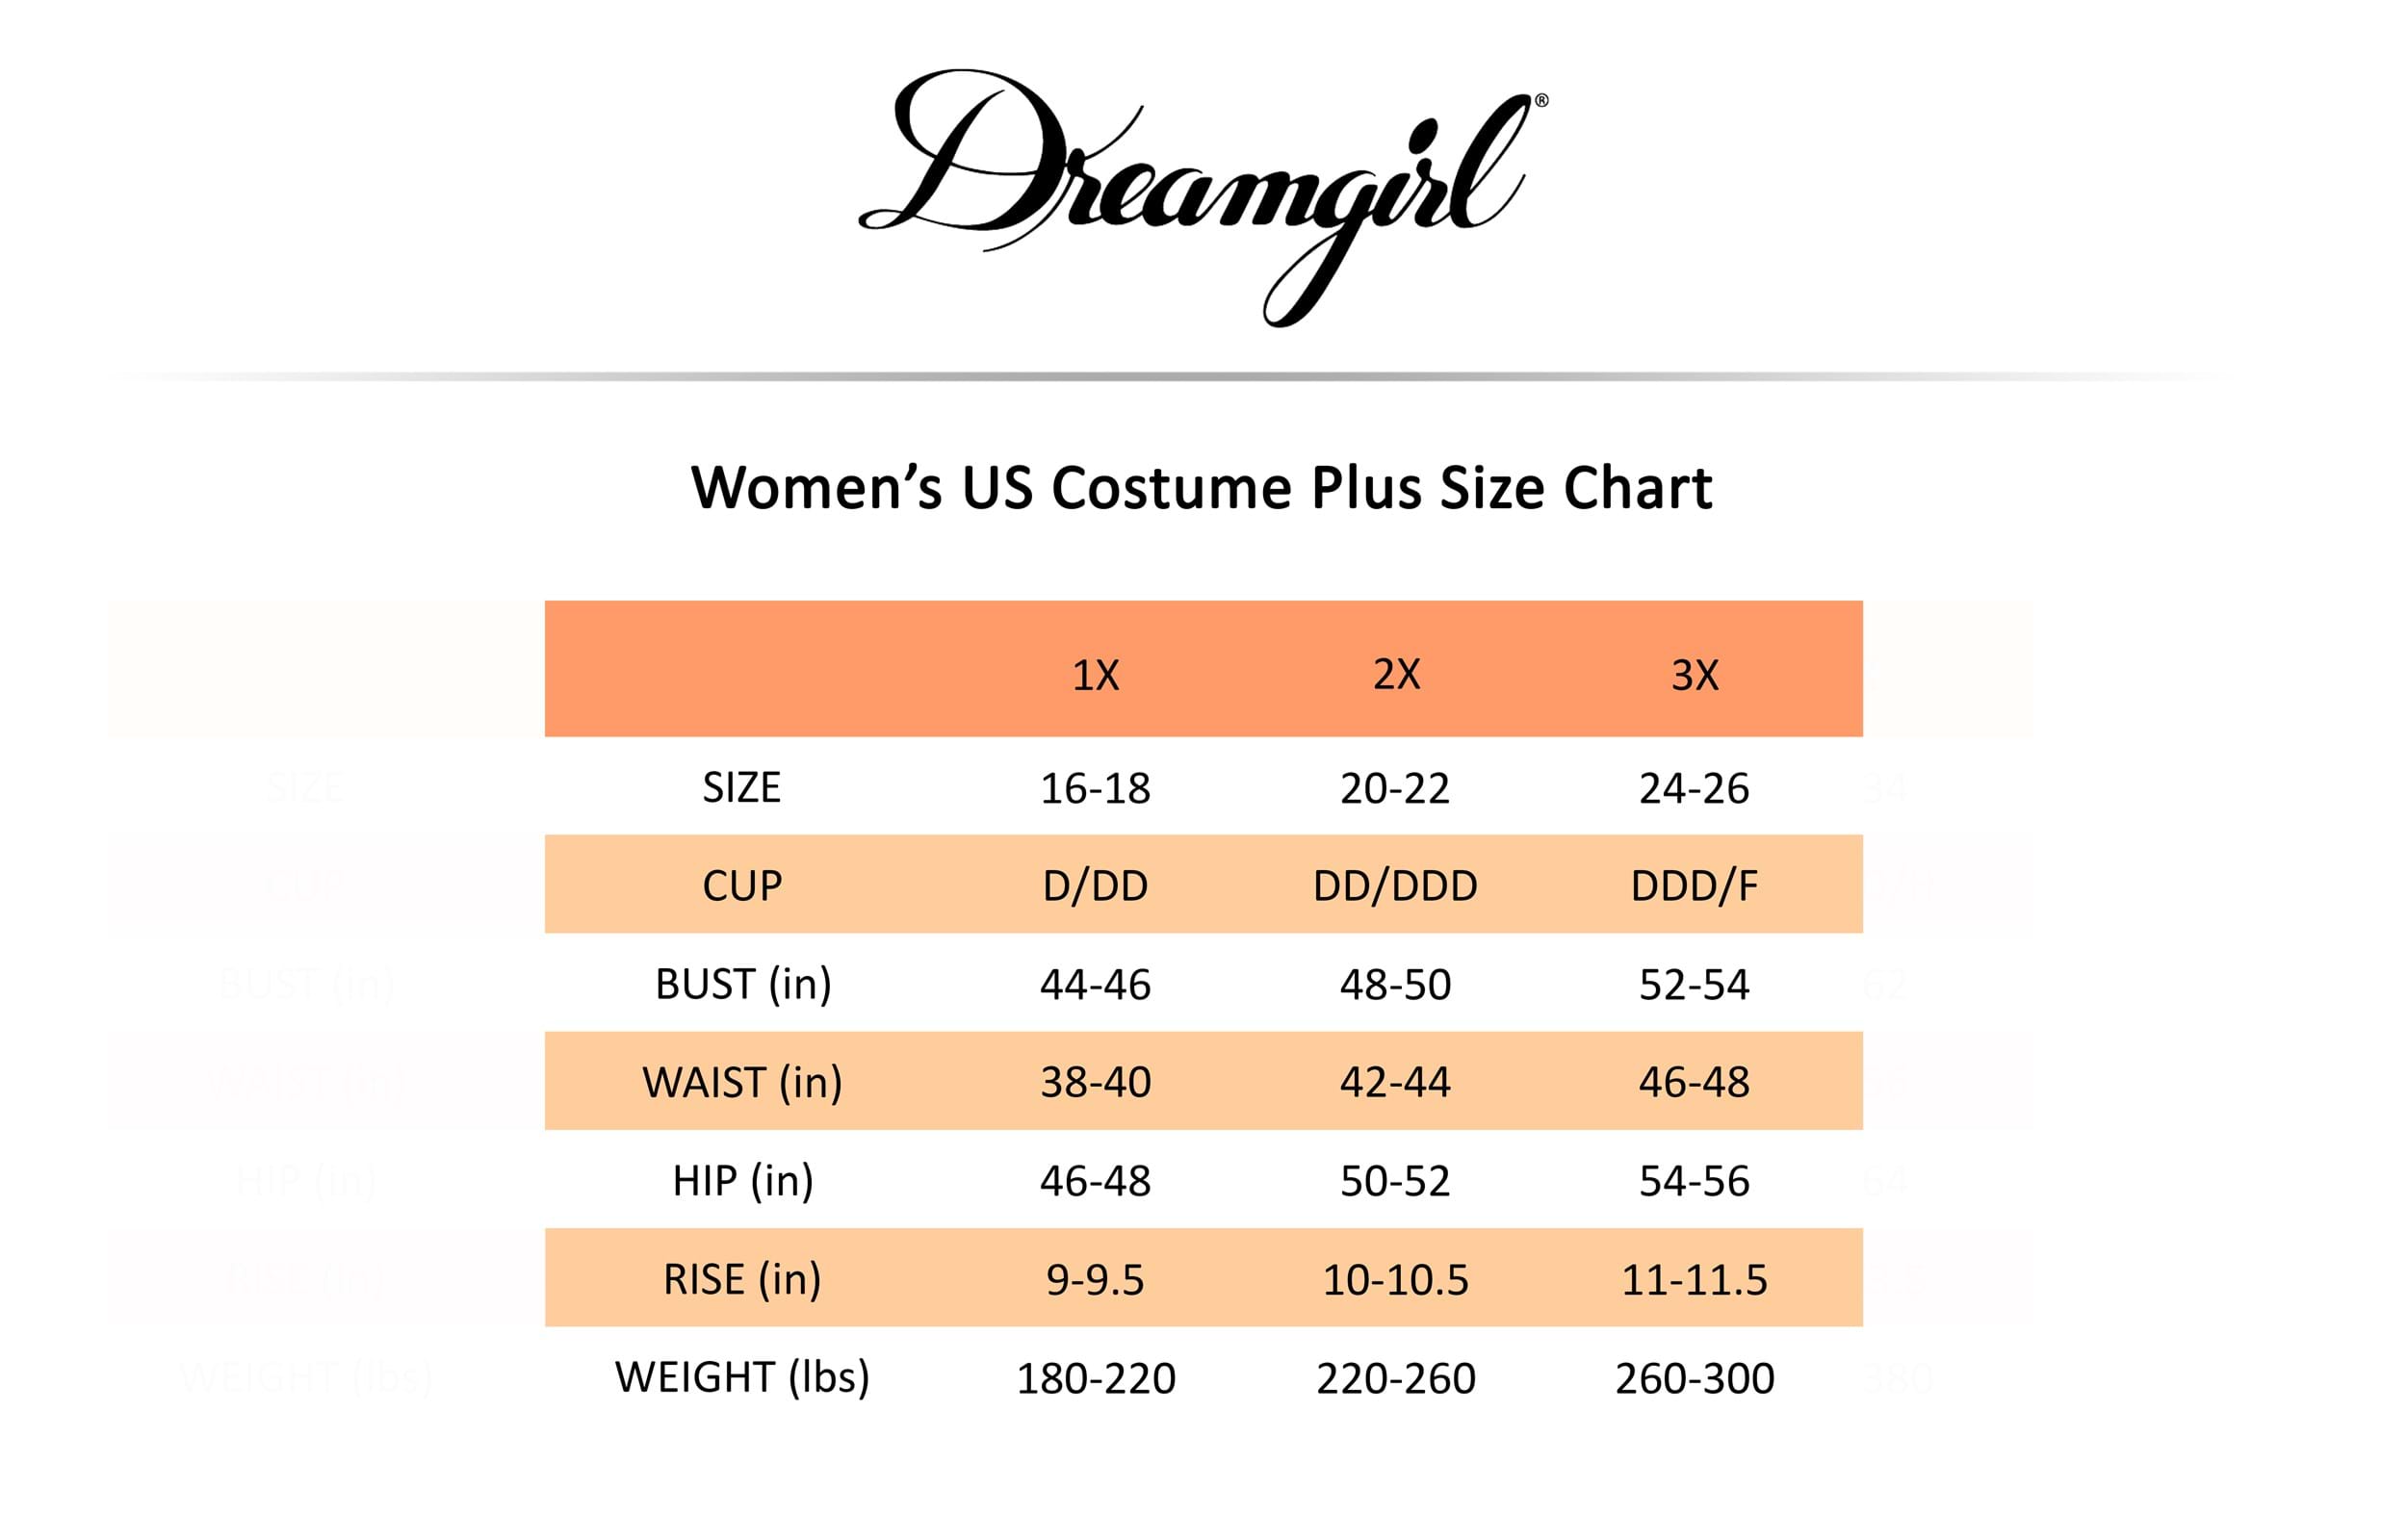 Disfraz de vampiresa Deluxe talla grande  Plus size costume, Costumes for  women, Apple costume